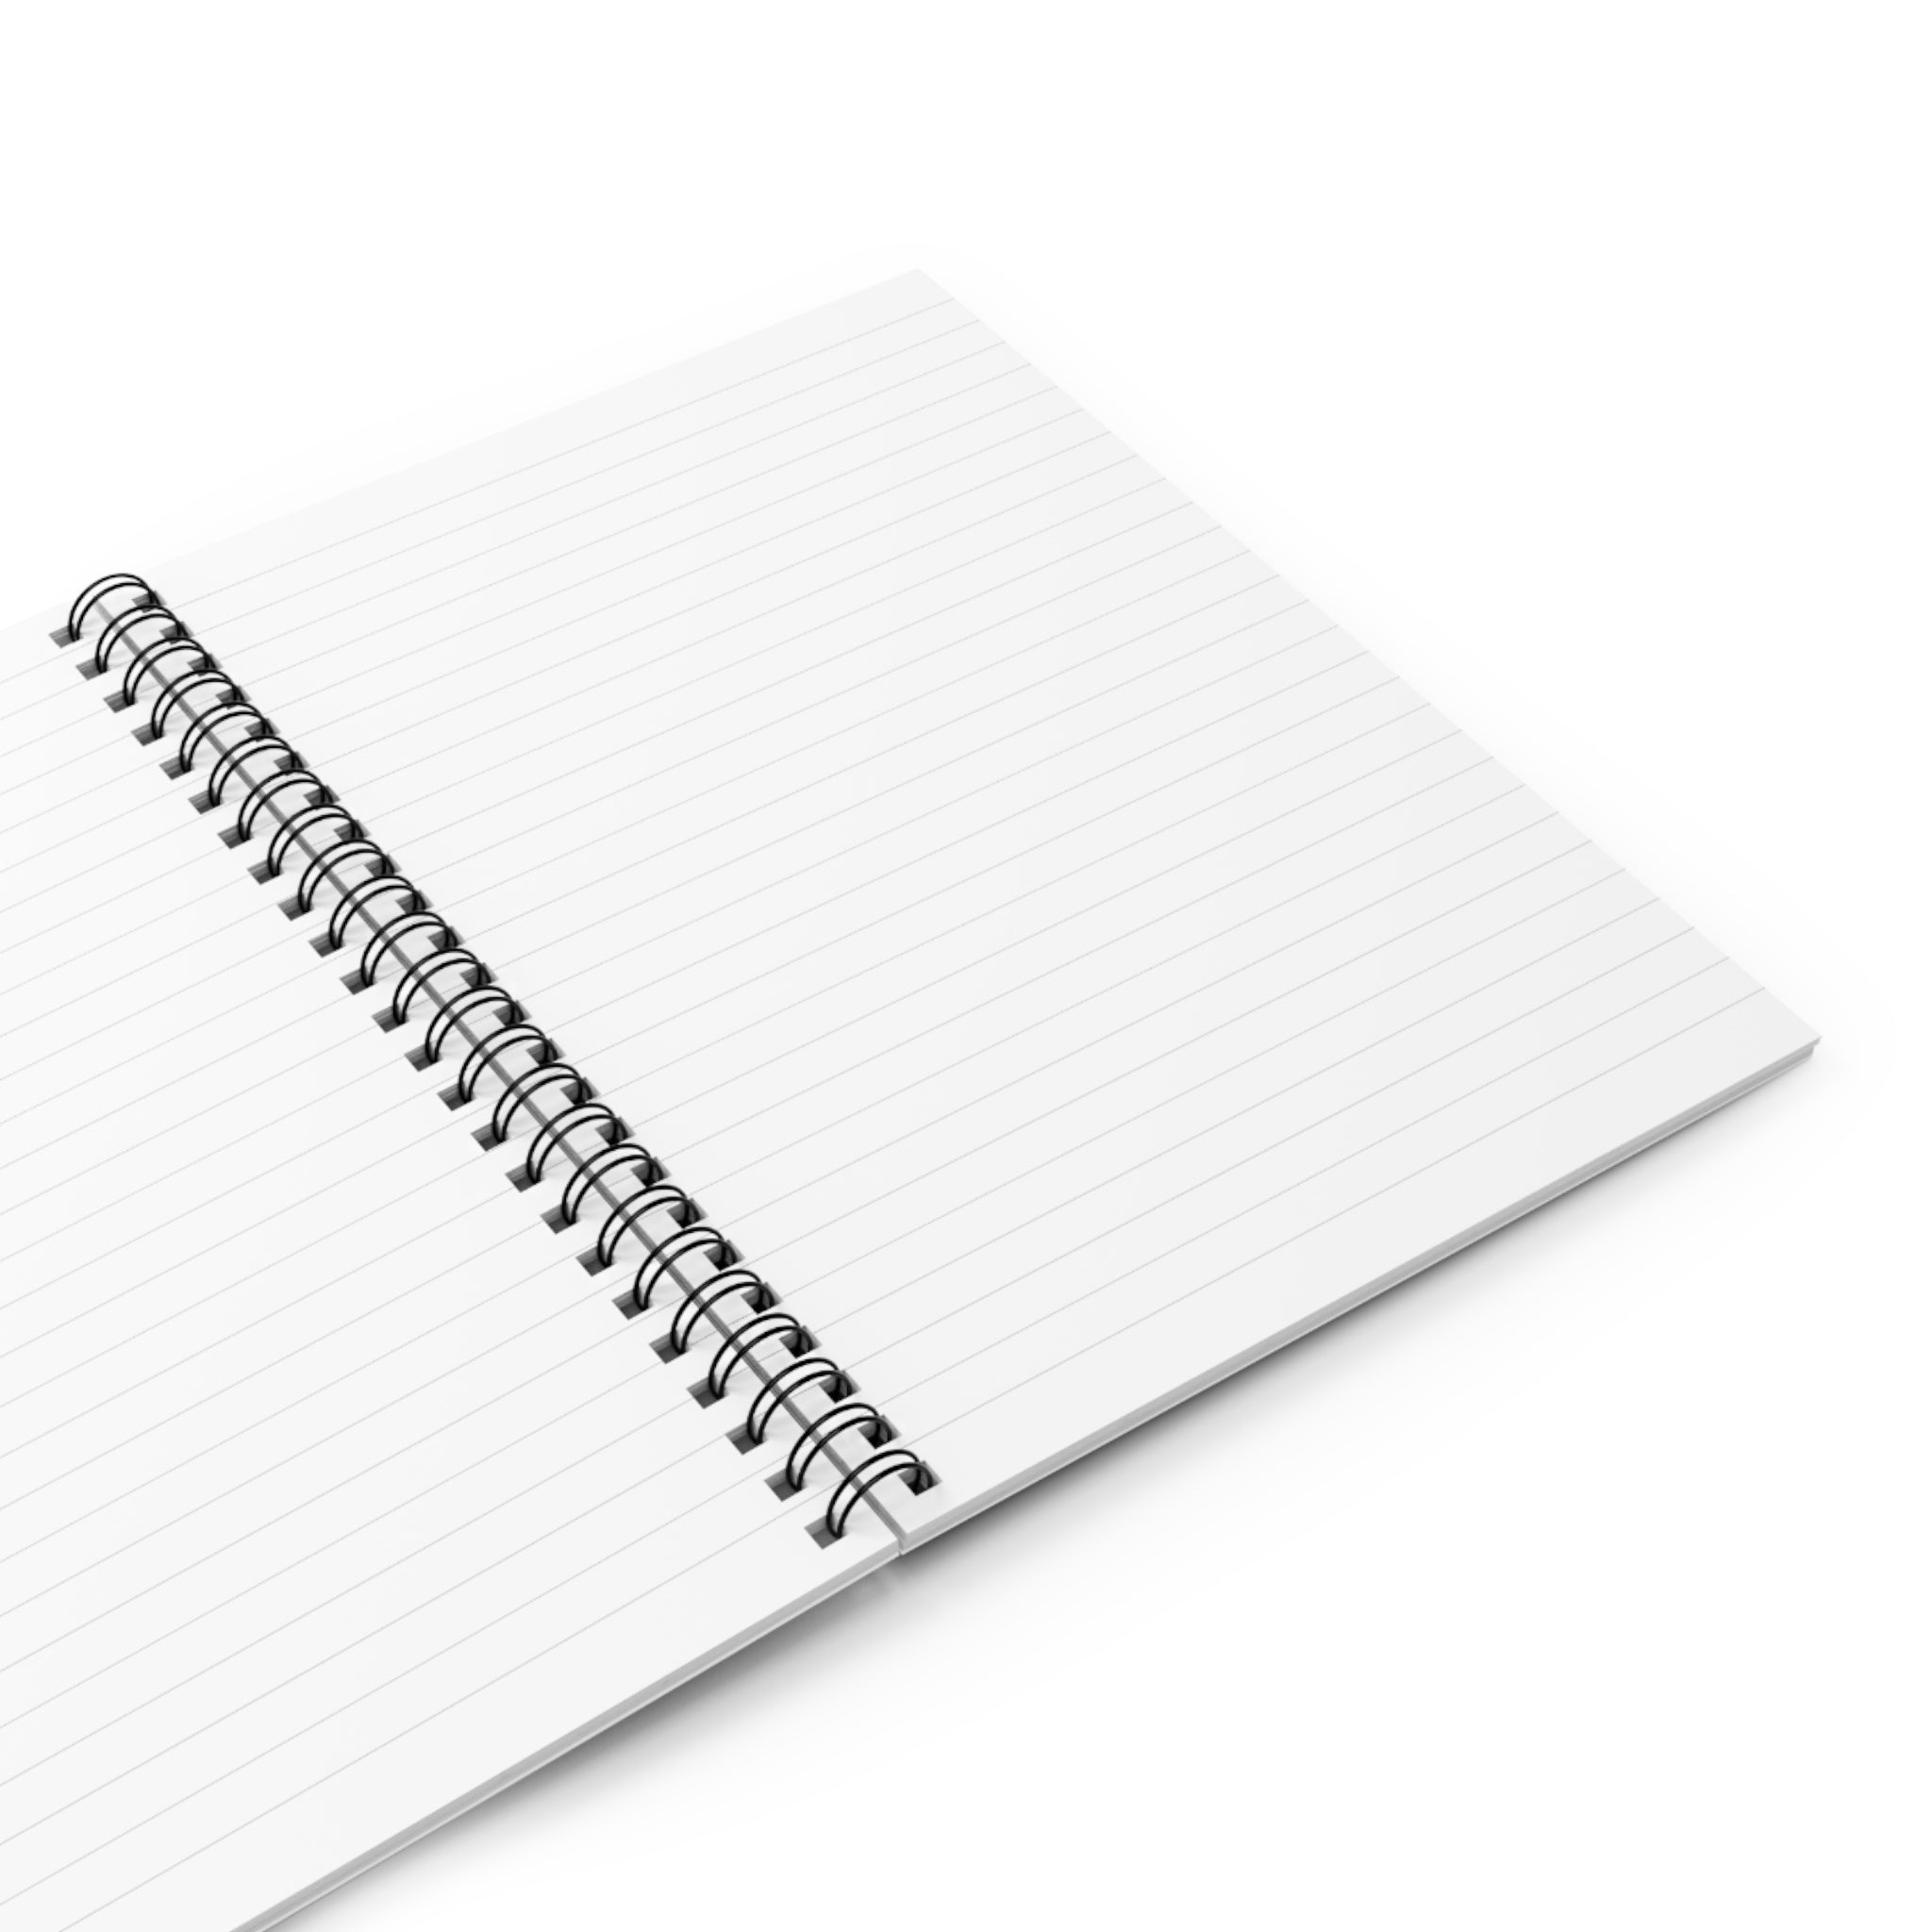 Motivational Saying Spiral Notebook - Ruled Line